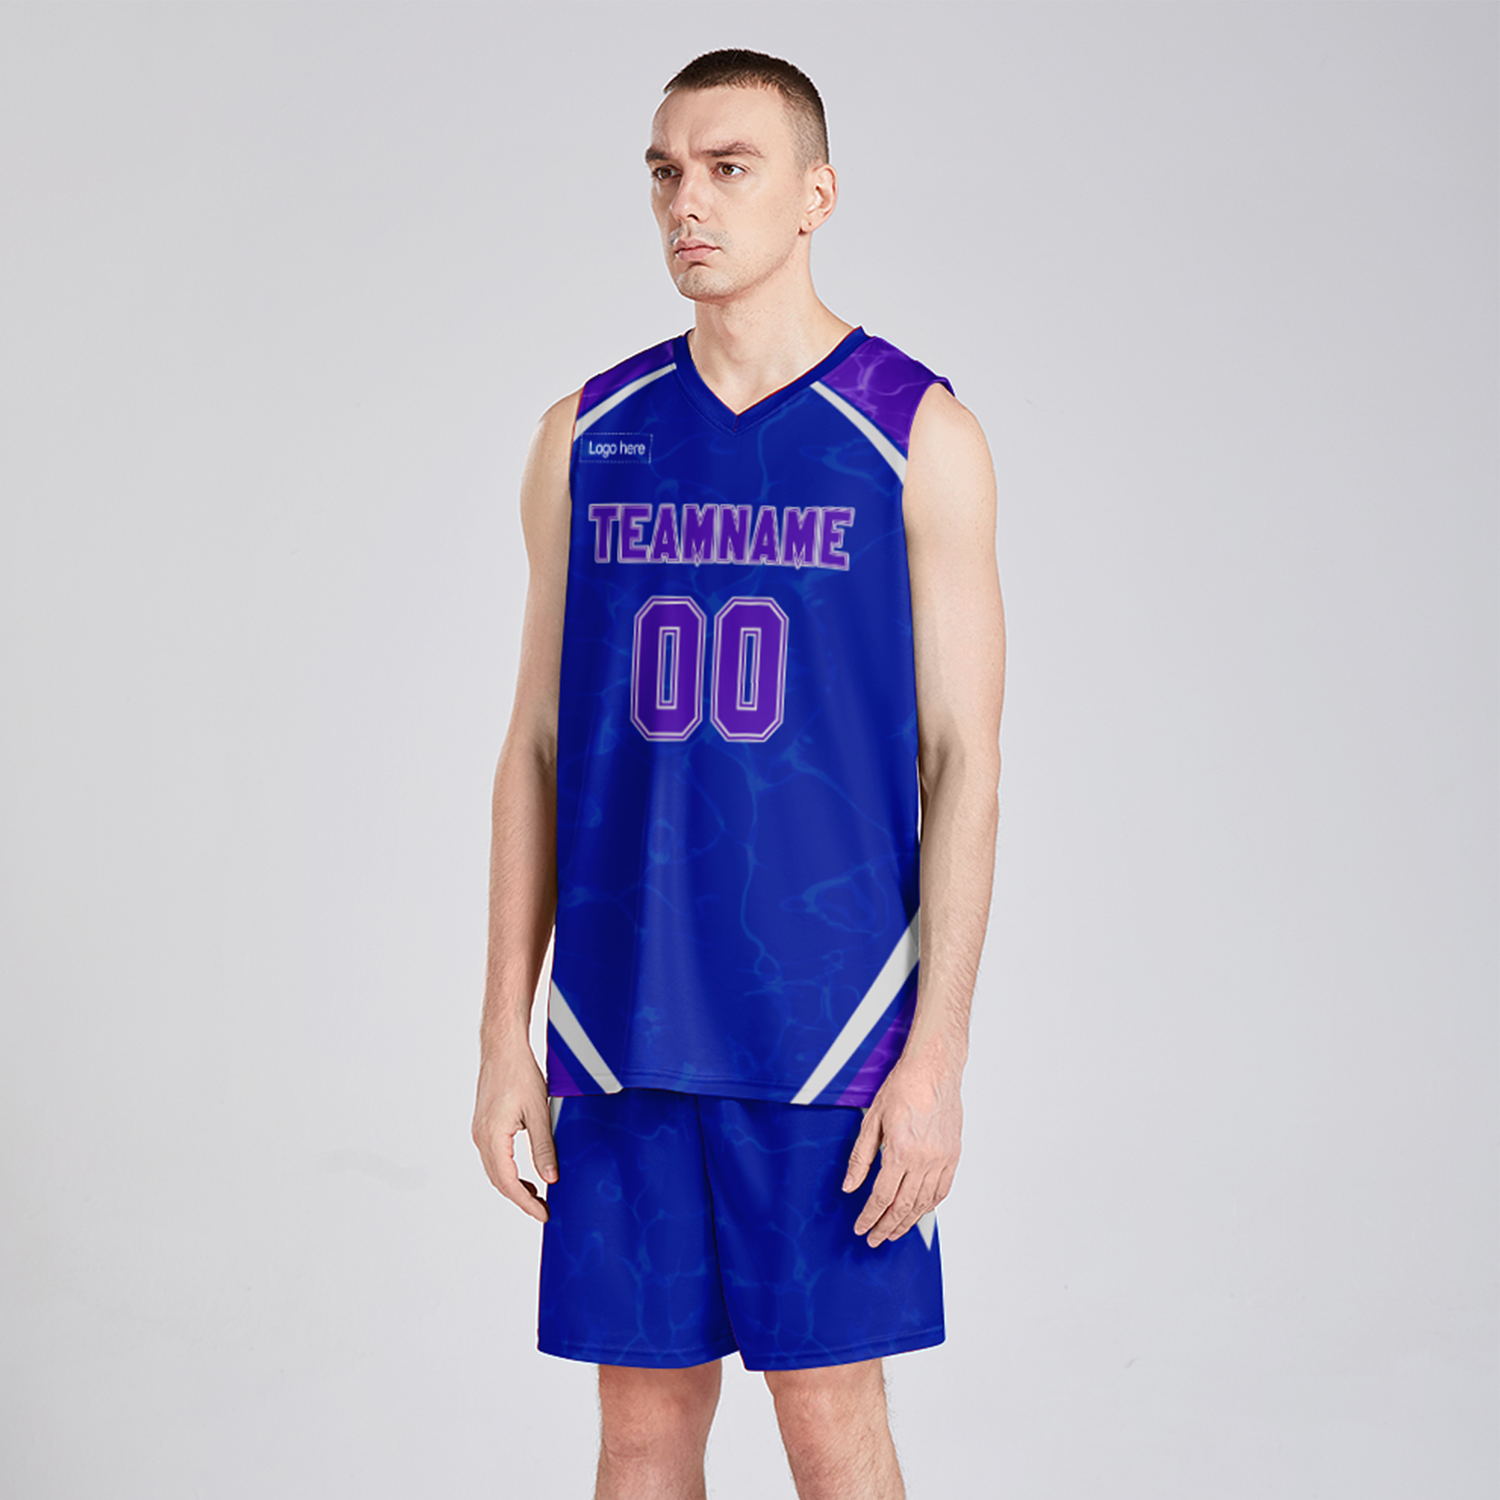 Digital Printing Custom Sports Suits Men Newest Best Basketball Jerseys Basketball Jerseys Shirts Tops Sportswear